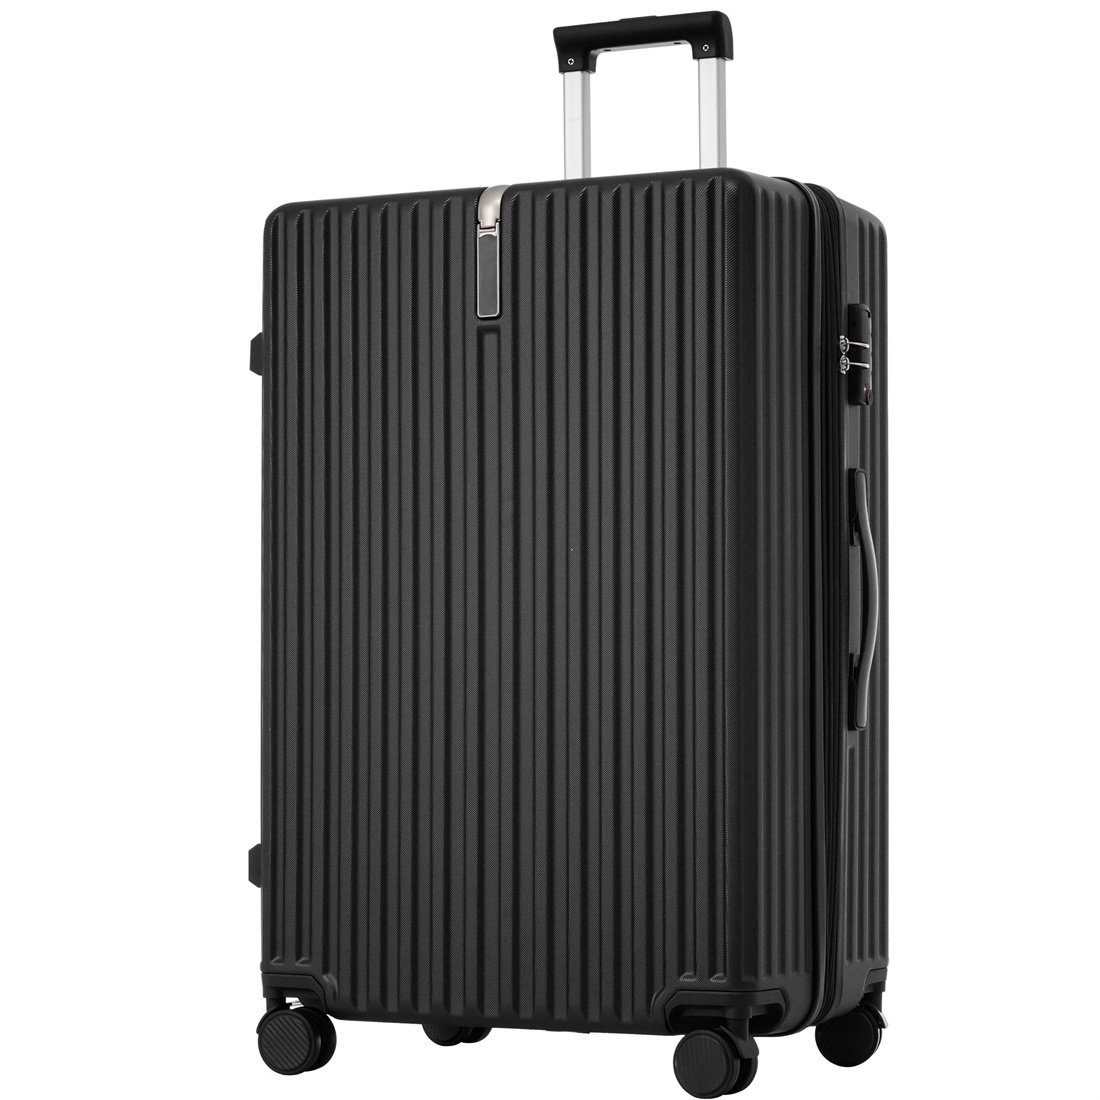 DÖRÖY schwarz Koffer Hartschalen-Koffer,Rollkoffer,Reisekoffer,65*43*28cm,